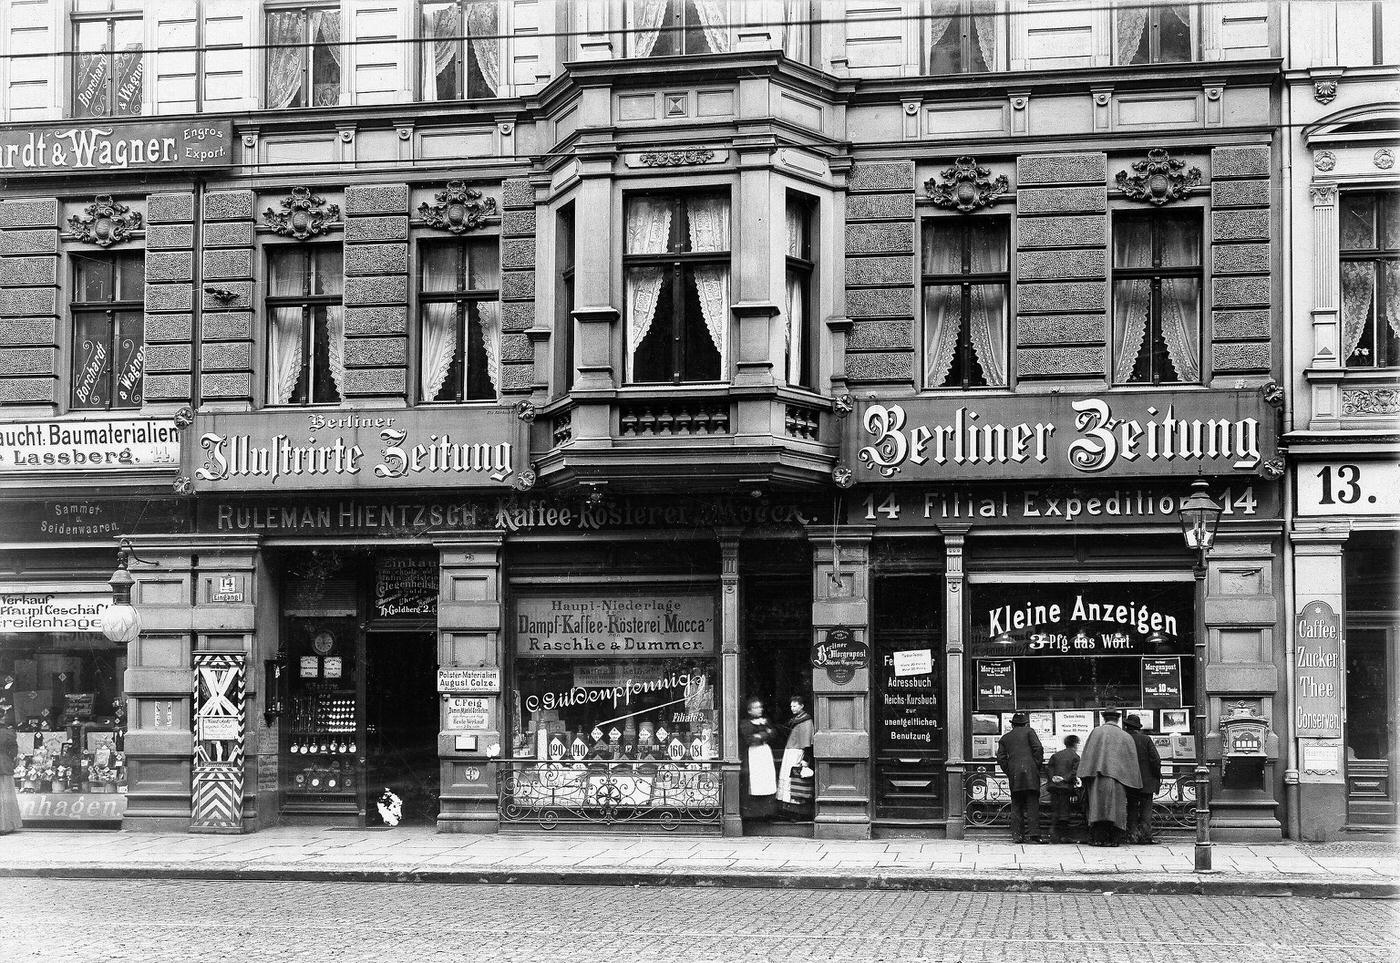 Ullstein agency in Berlin's Brunnenstraße, Germany, around 1900